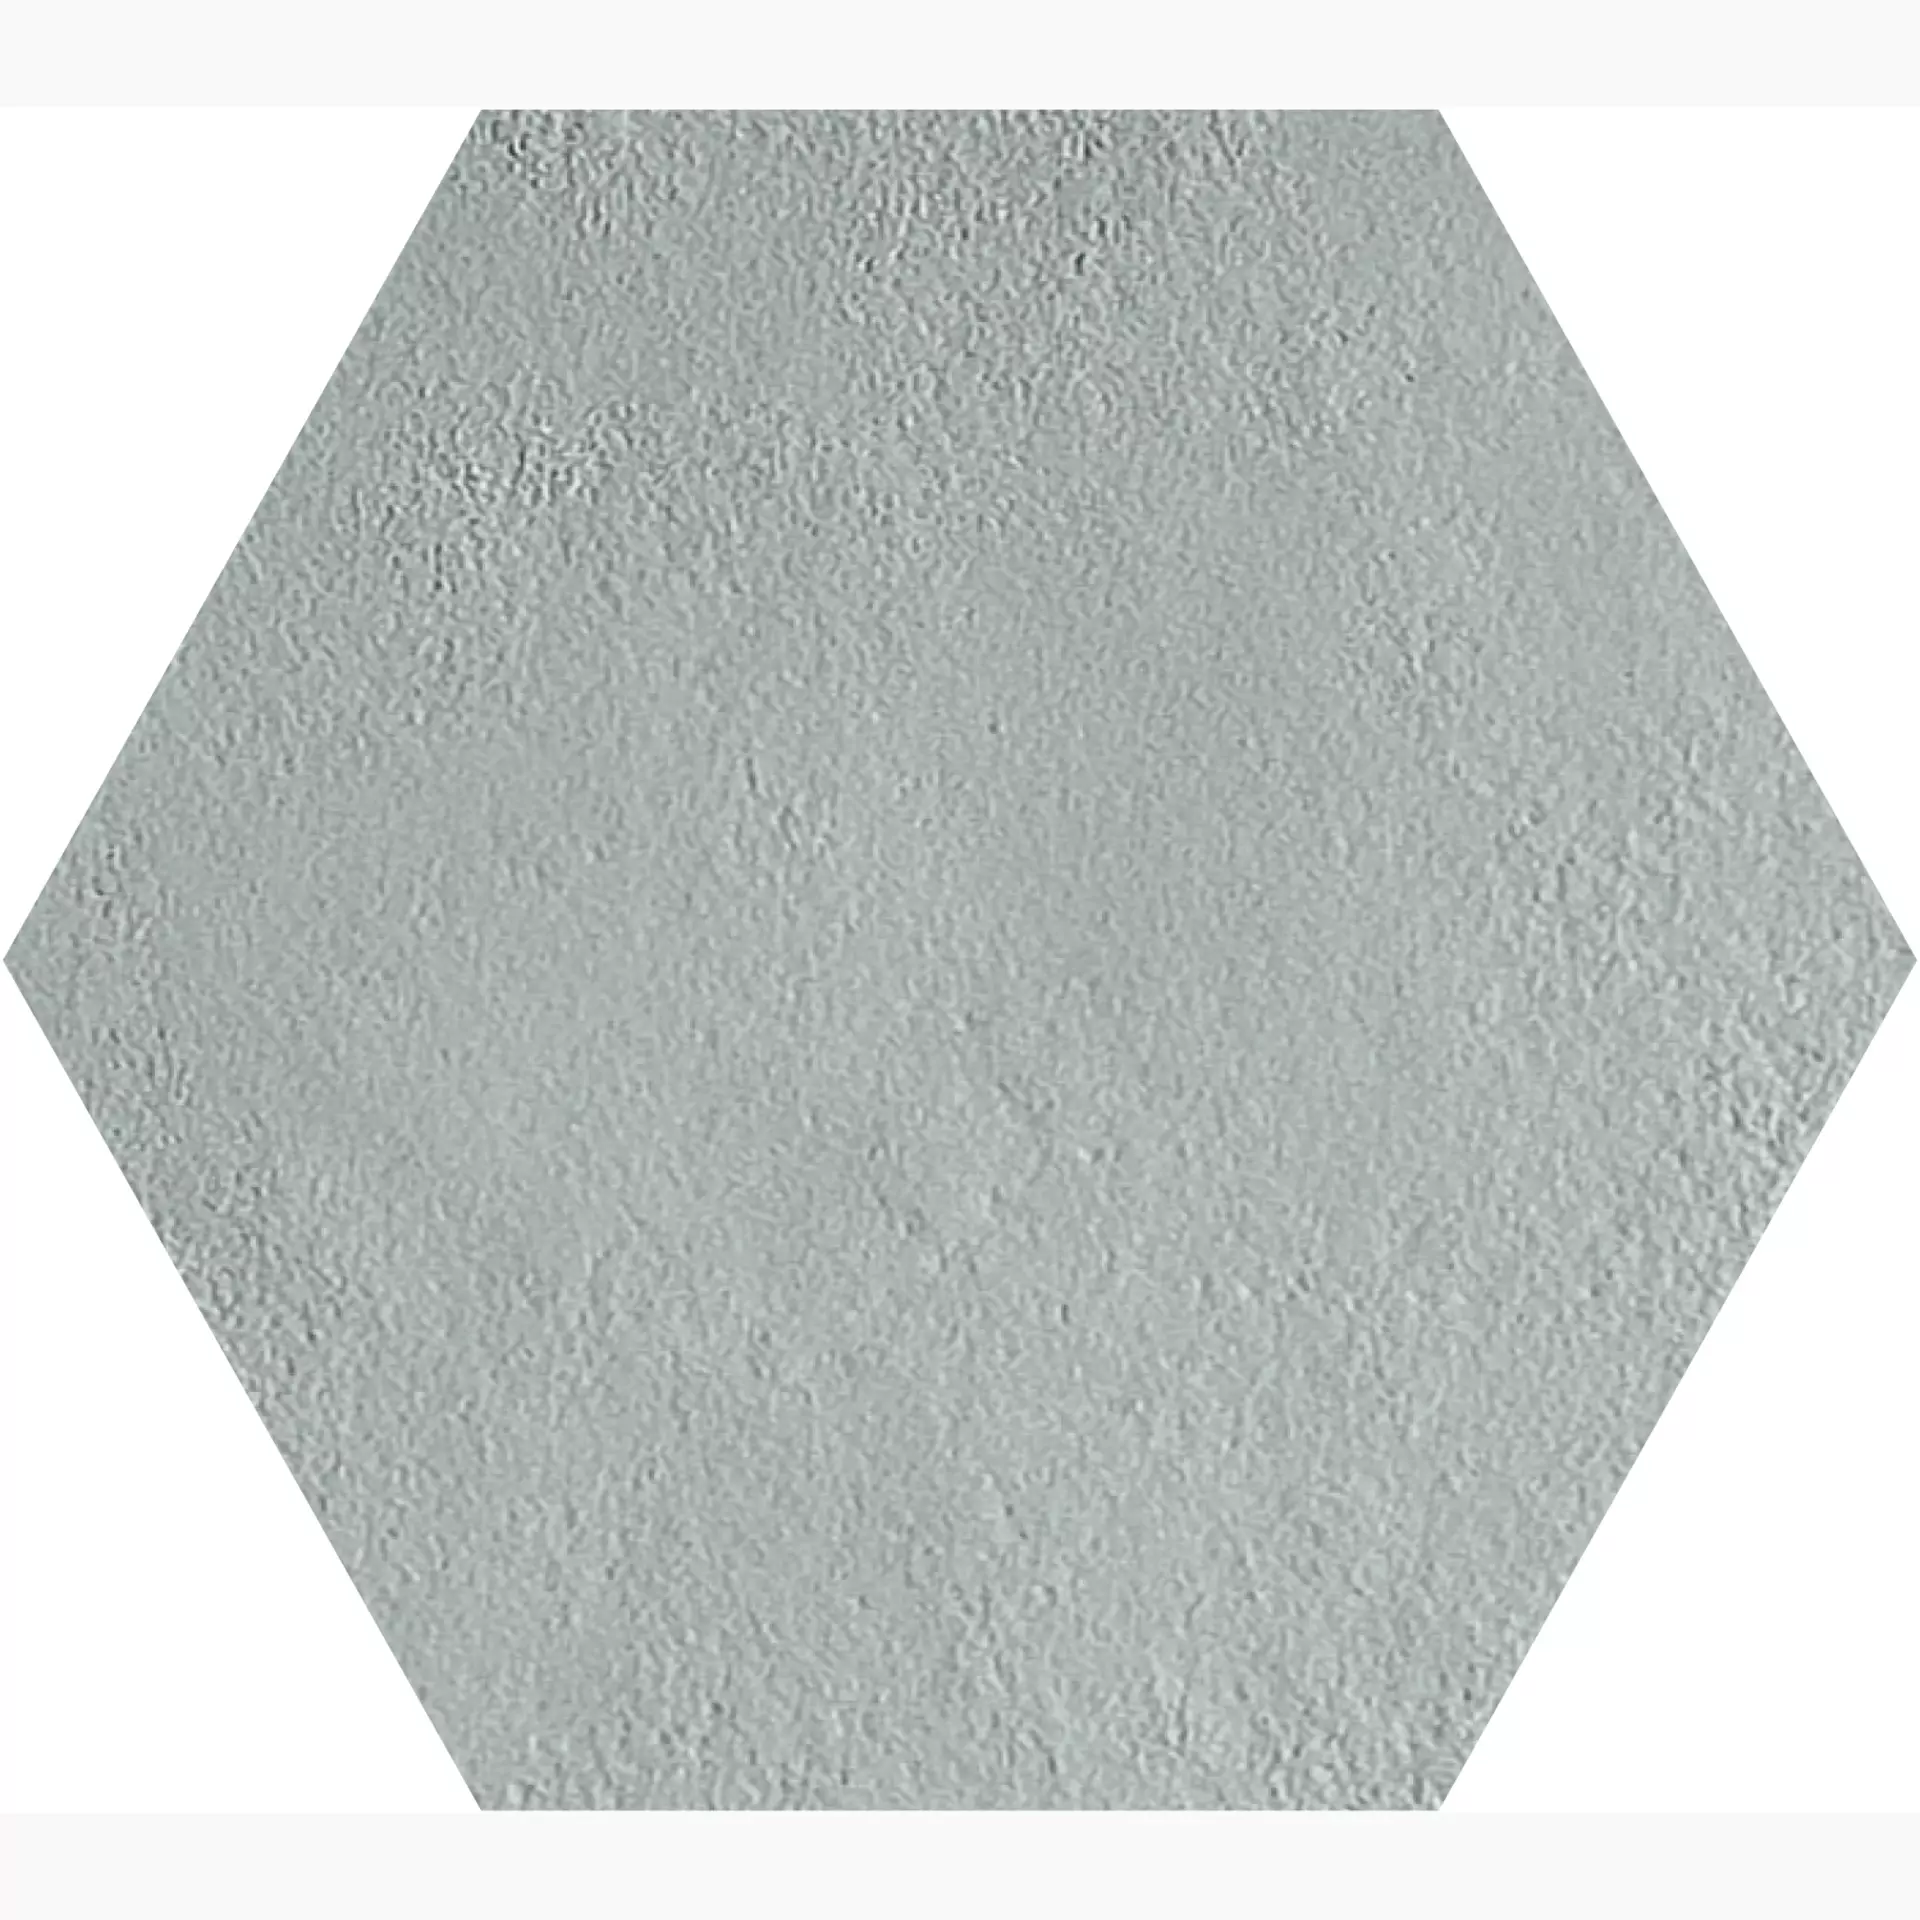 Gigacer Argilla Marine Material Decor Small Hexagon PO9ESAMARINE 16x18cm 6mm